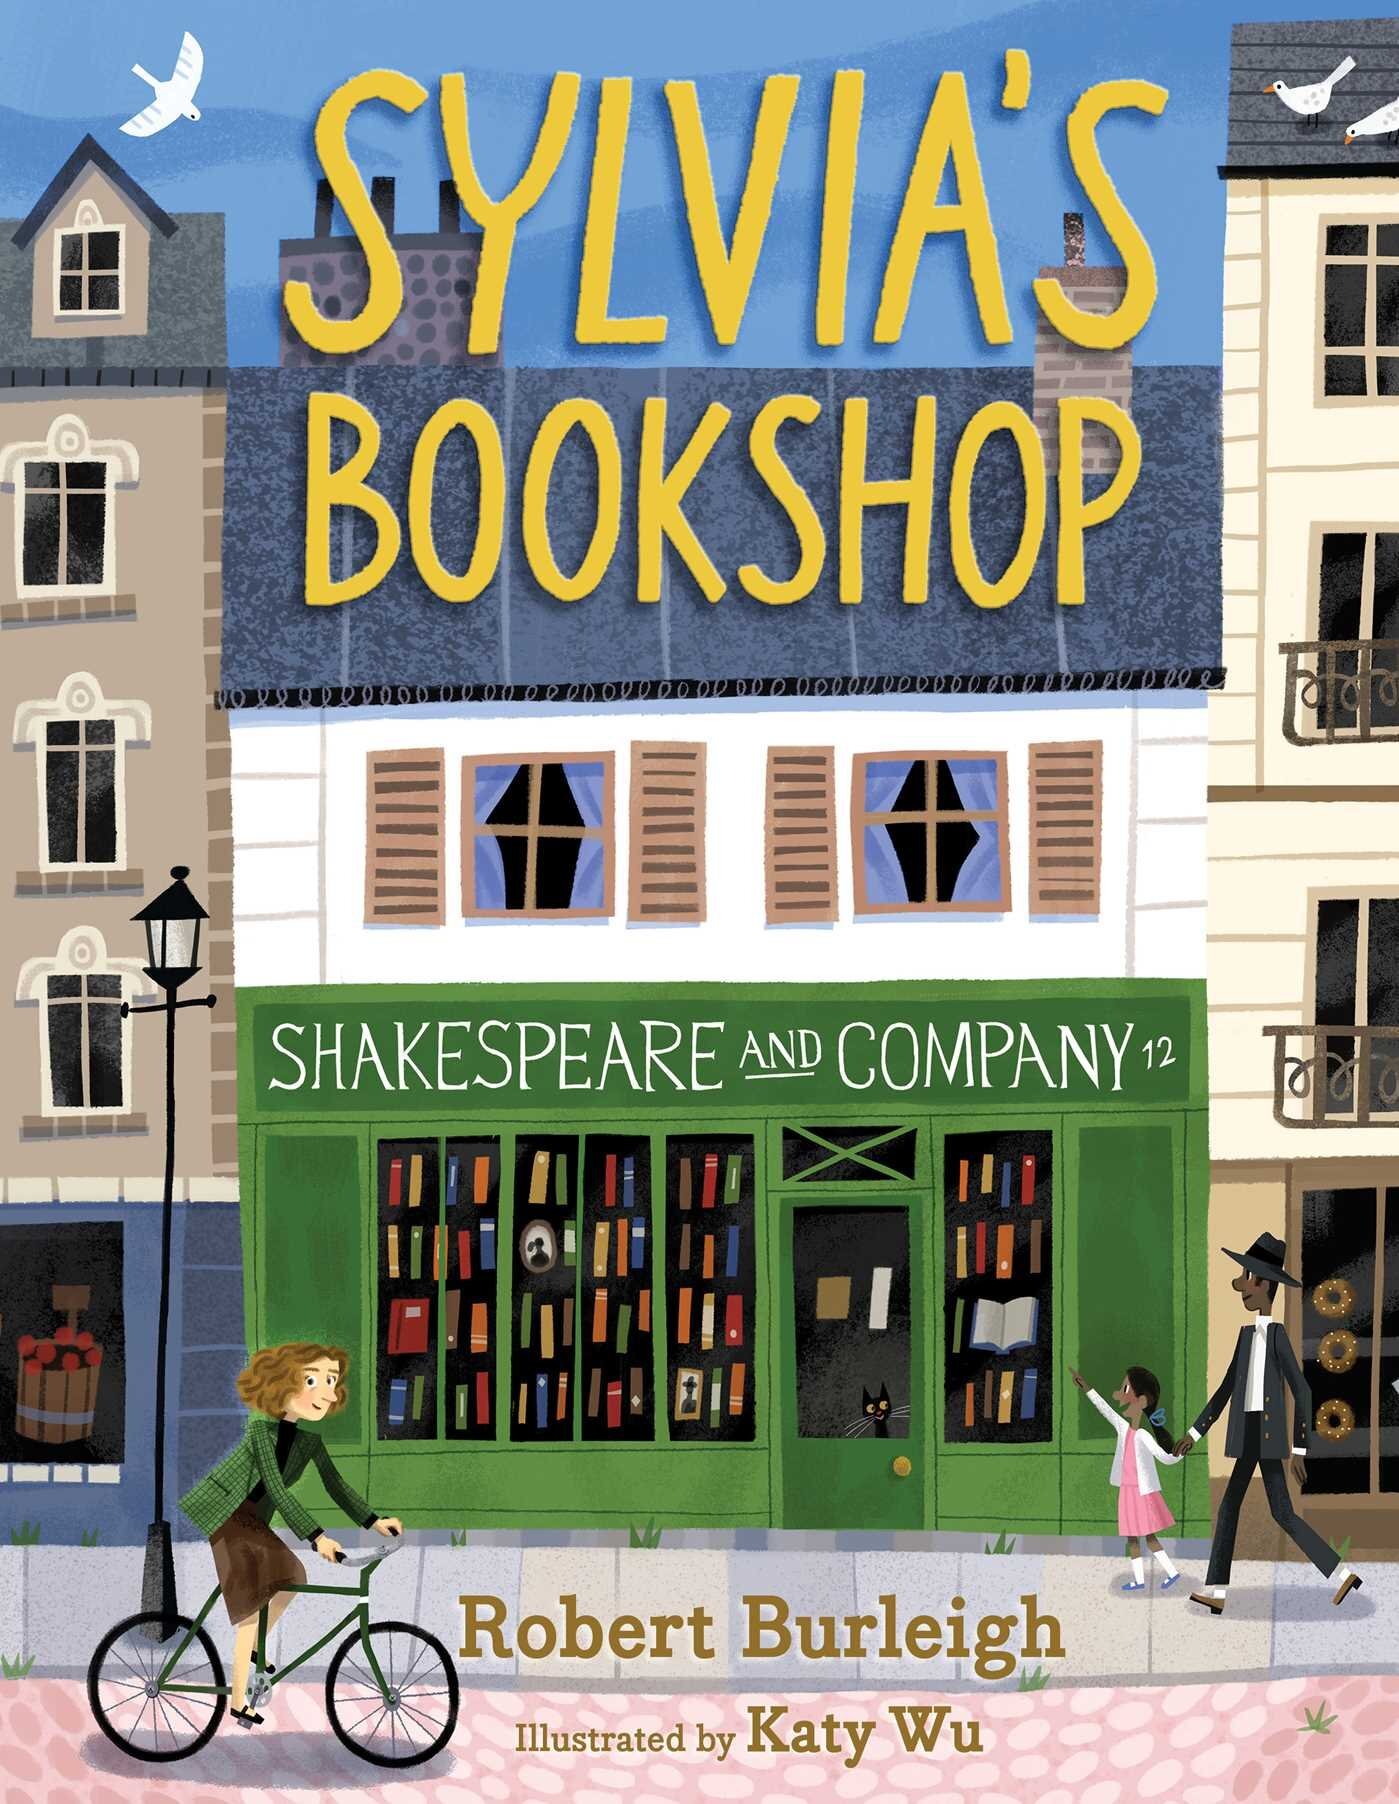 burleigh, sylvia's bookshop.jpg